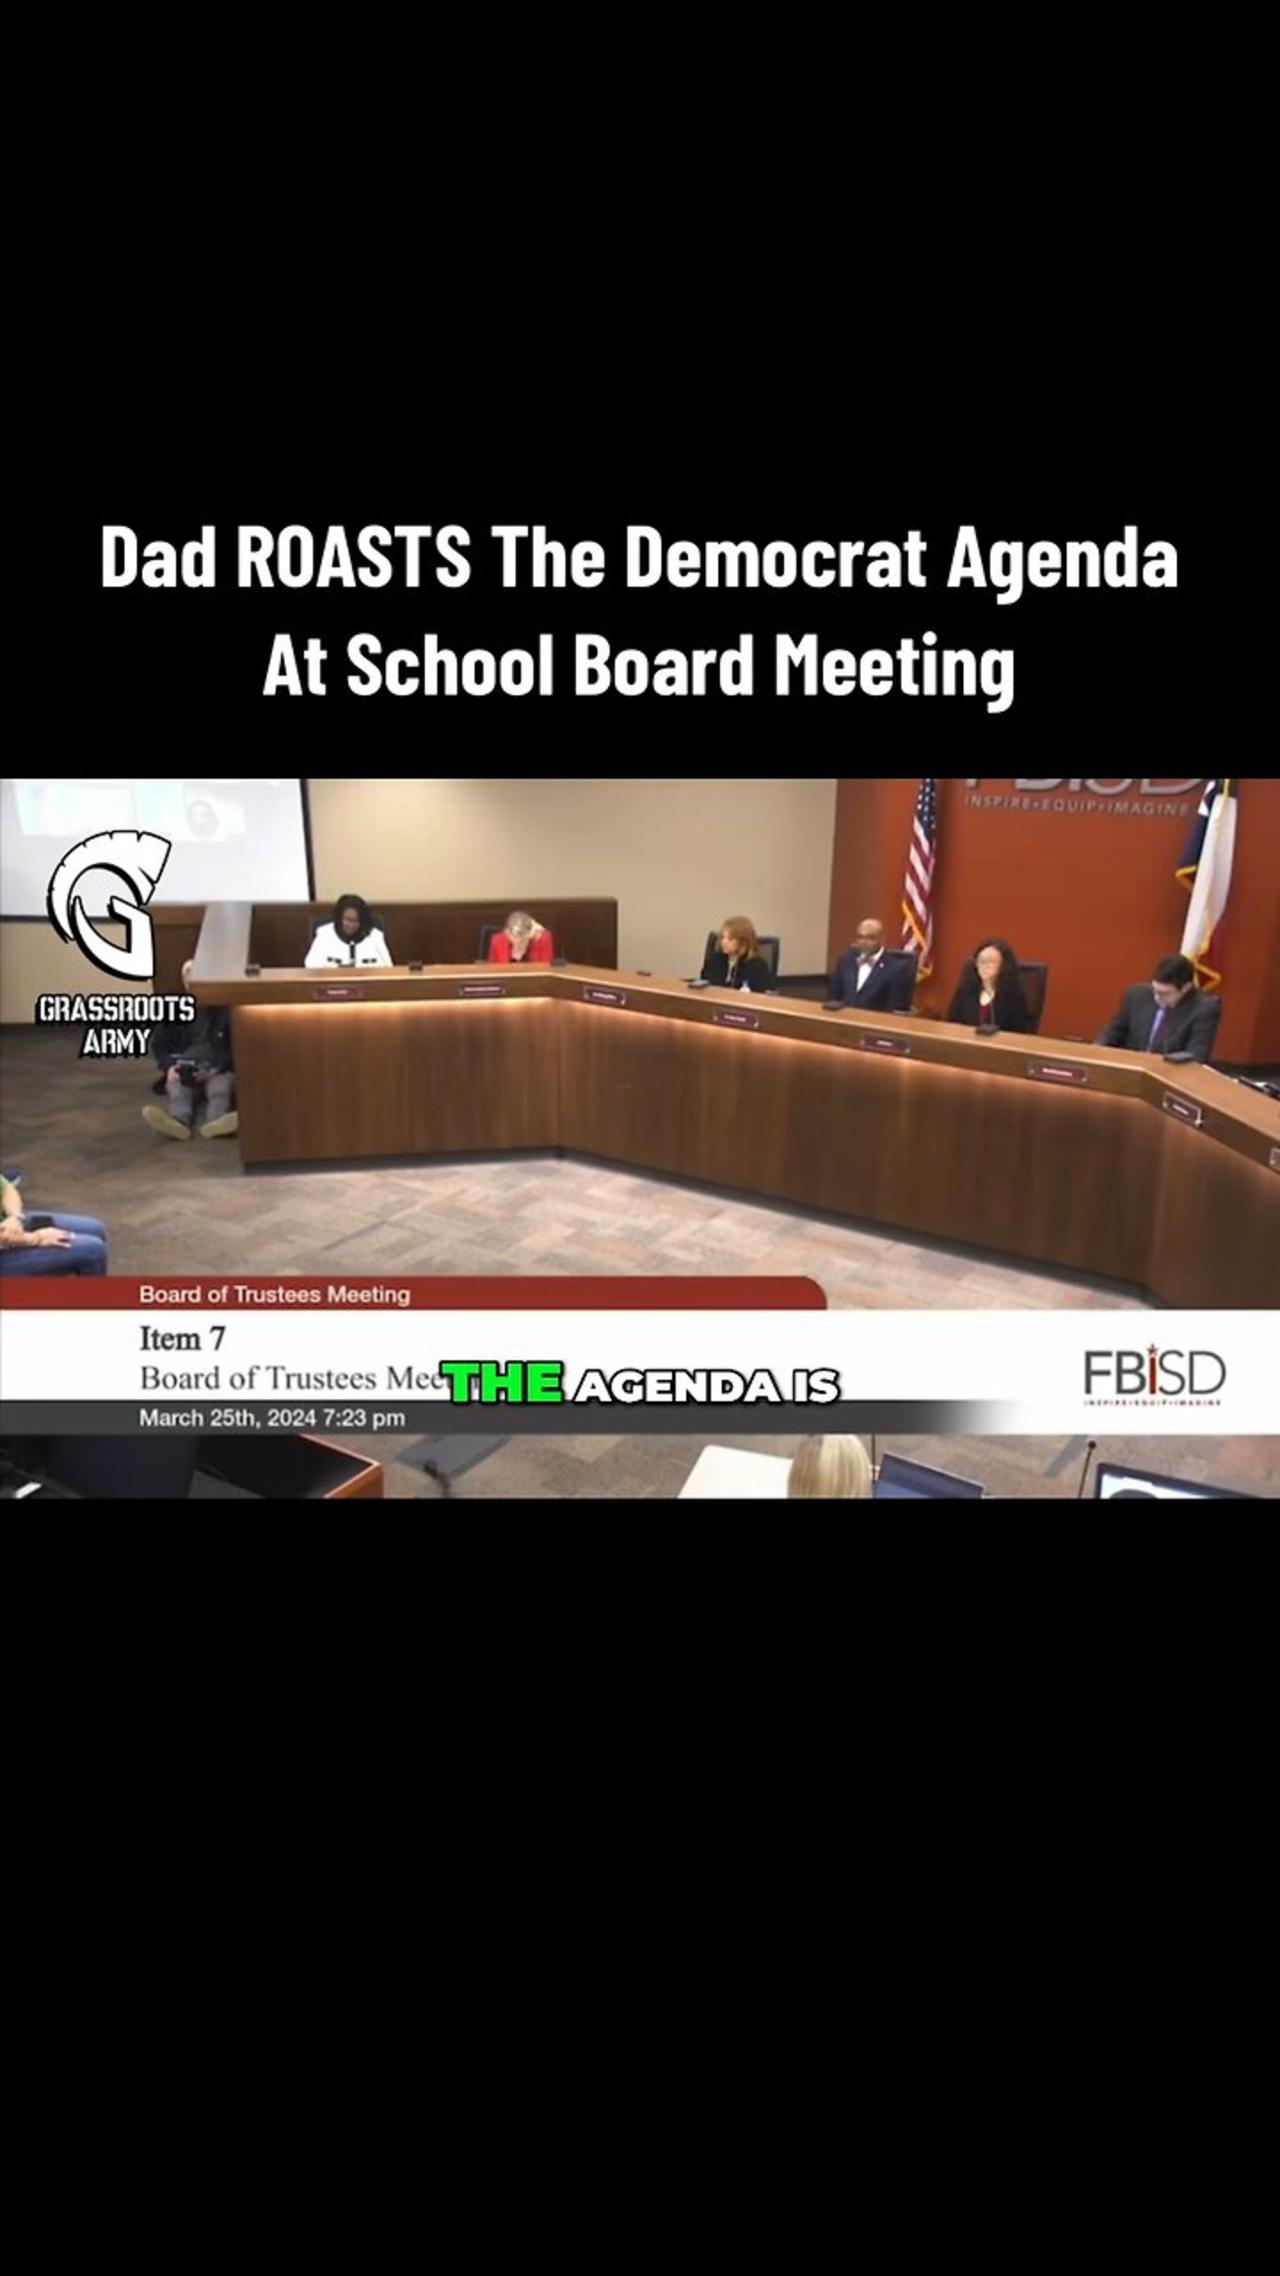 Dad ROASTS The Democratic Agenda